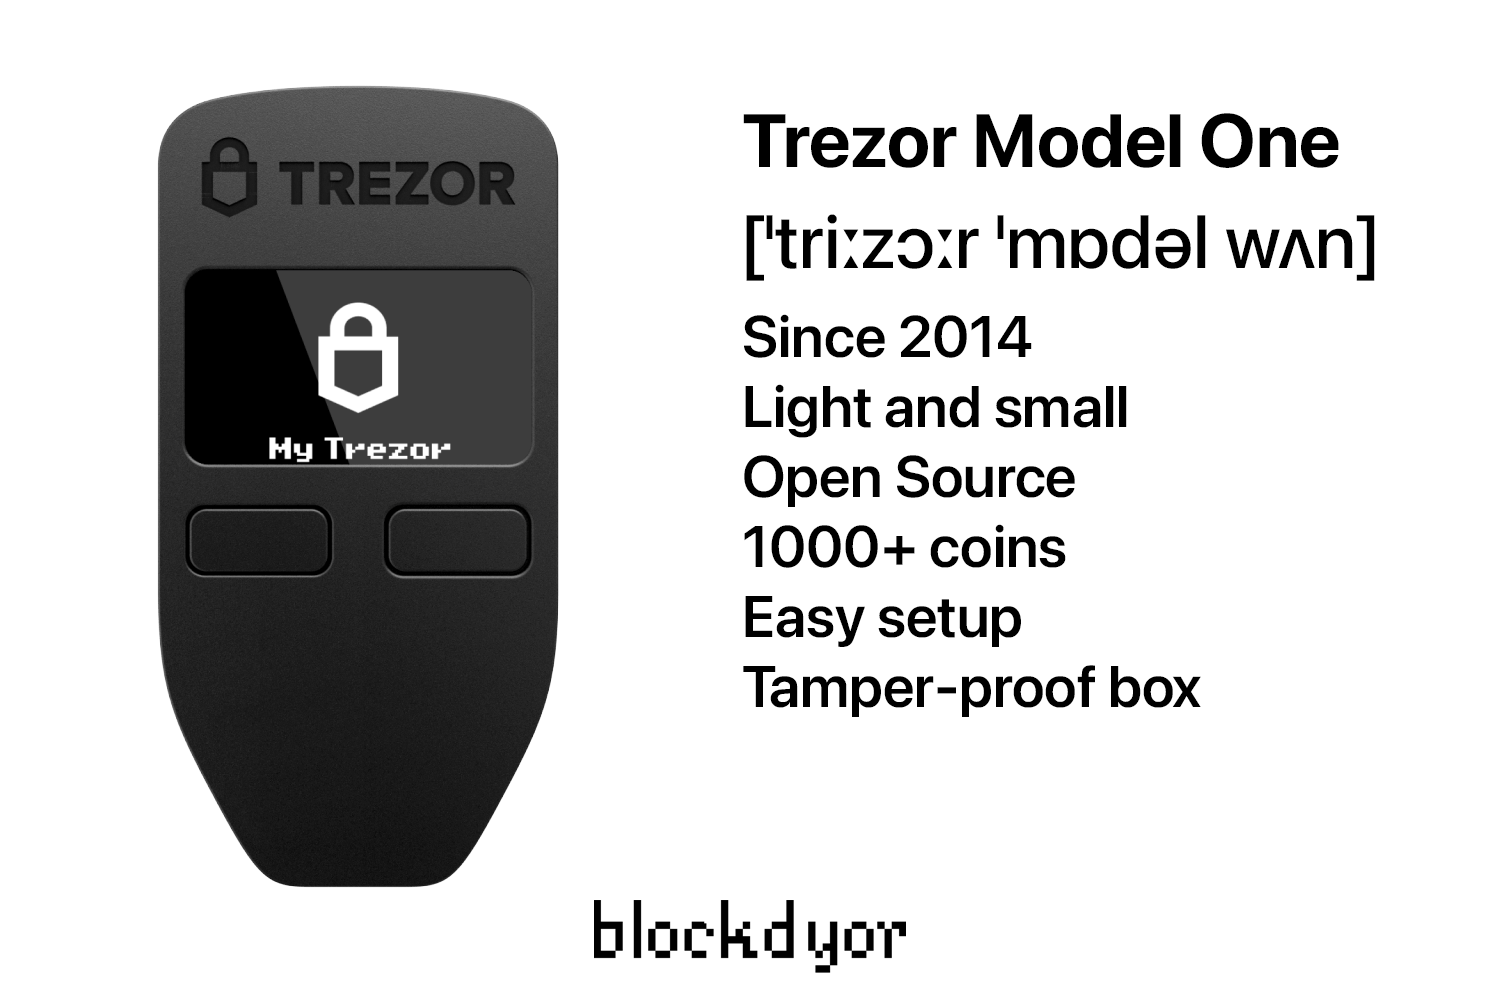 Trezor Model One Overview